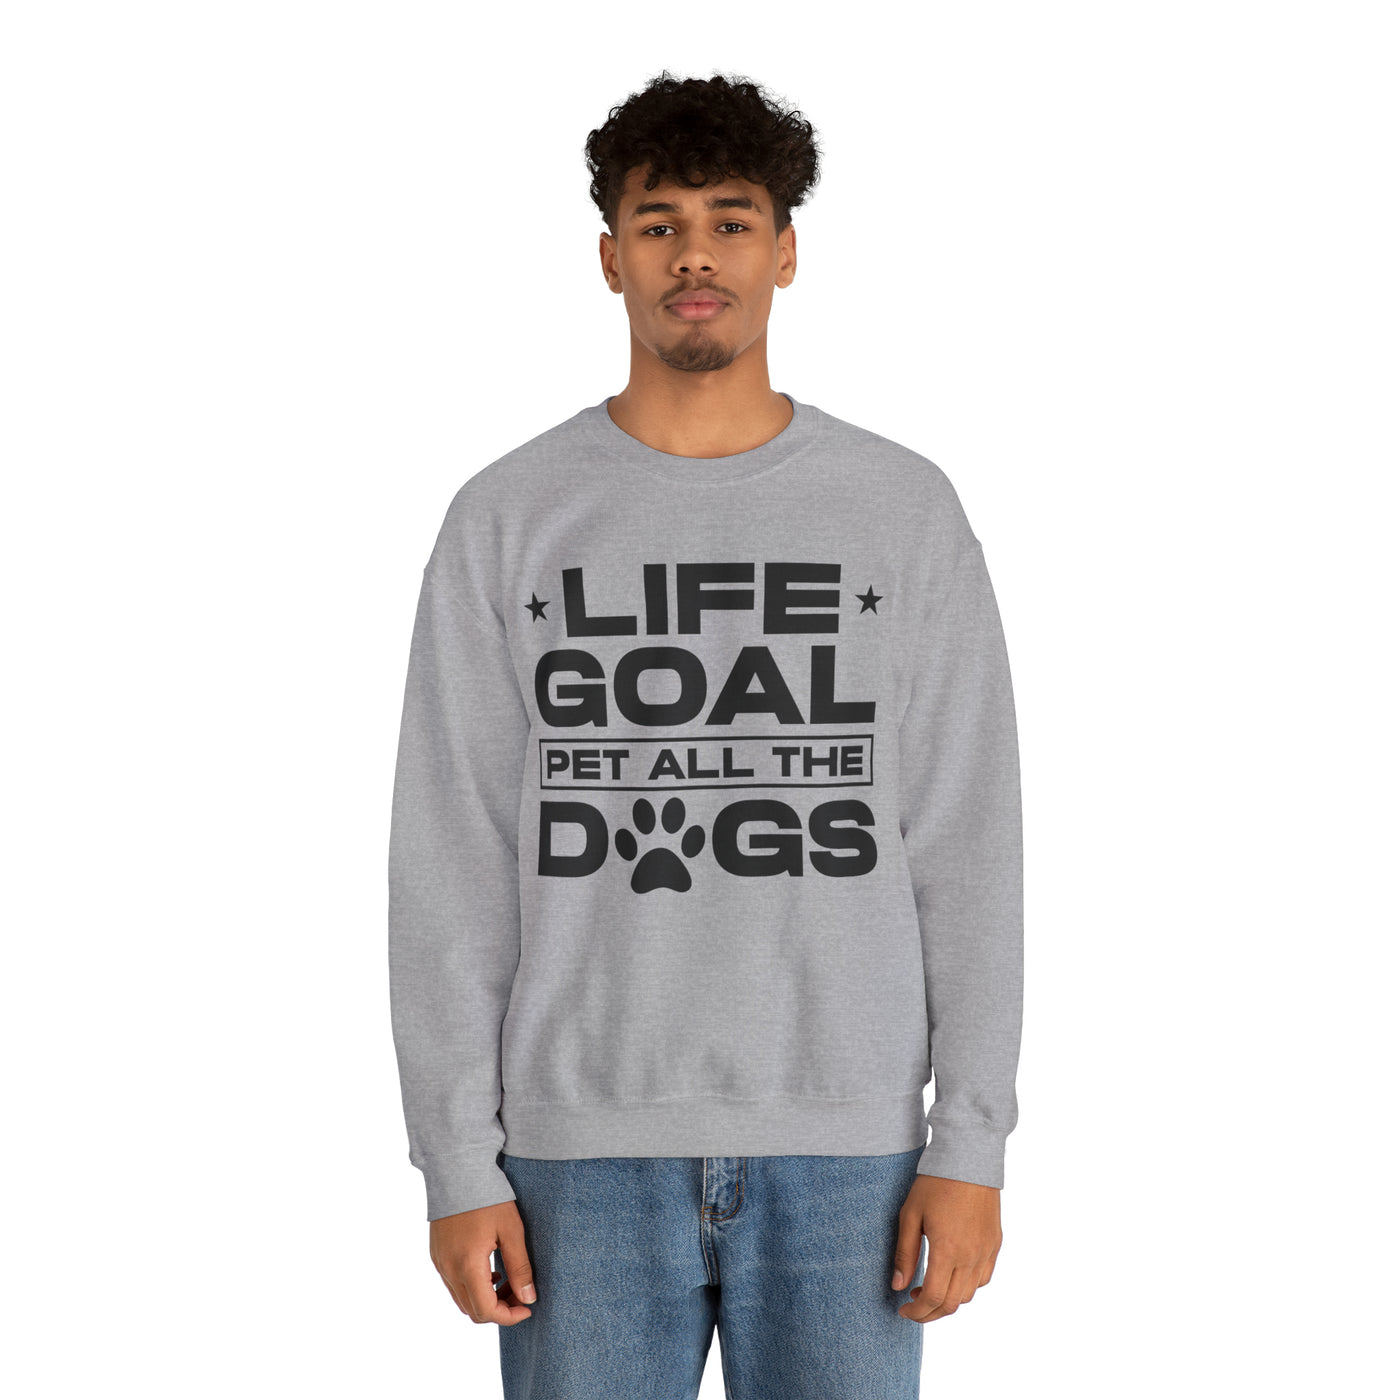 Life goal pet all the dogs Black Print Sweatshirt